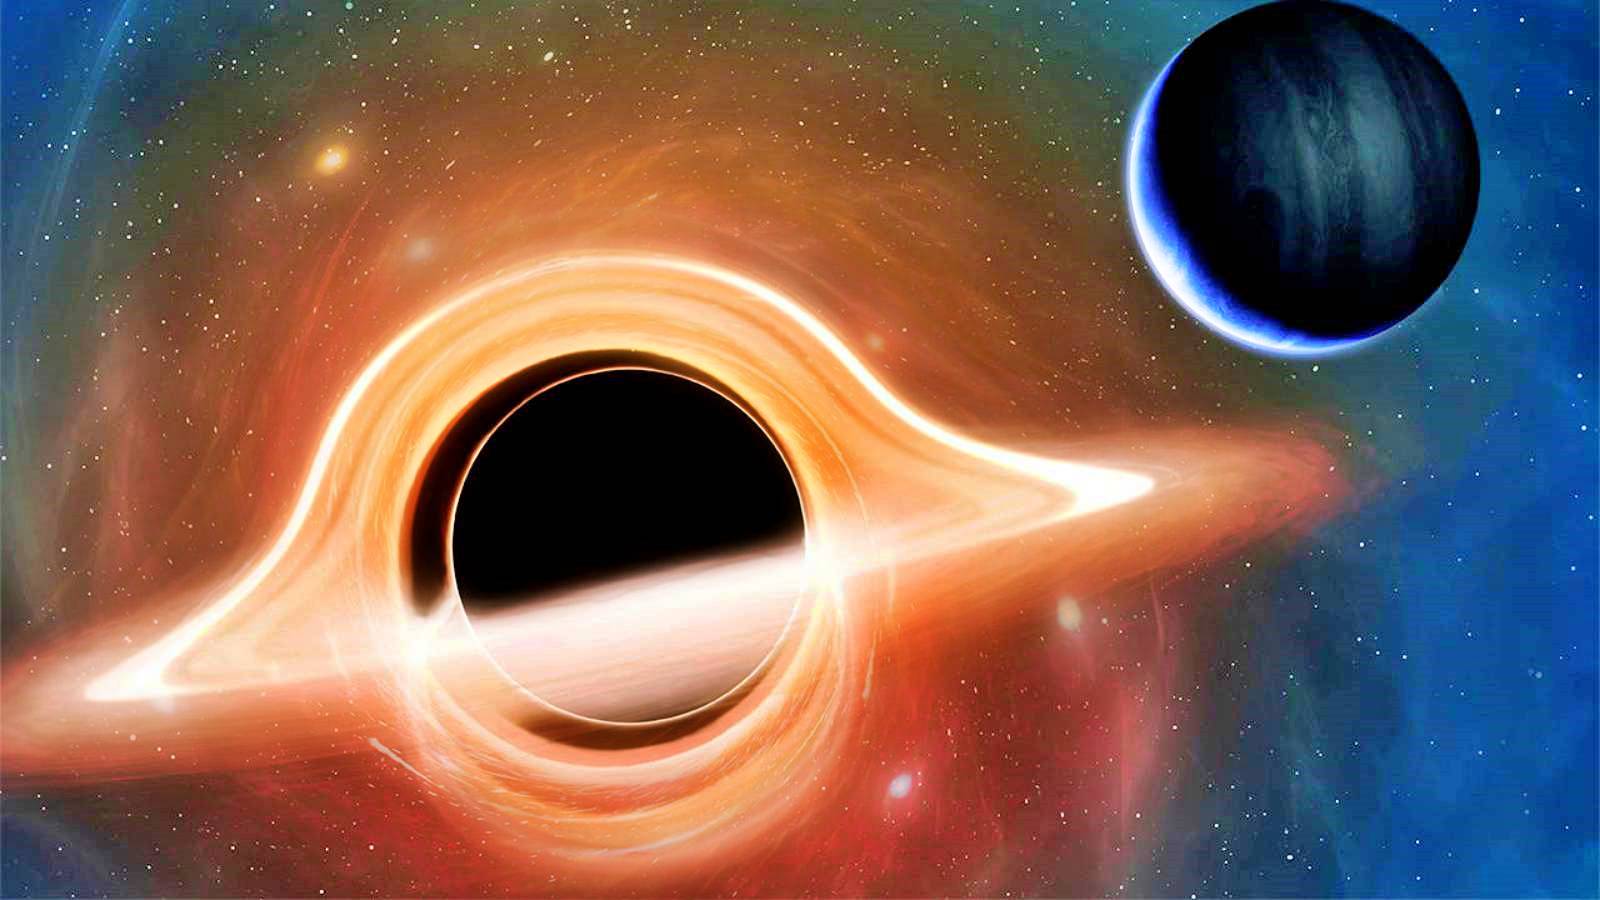 Black hole detail